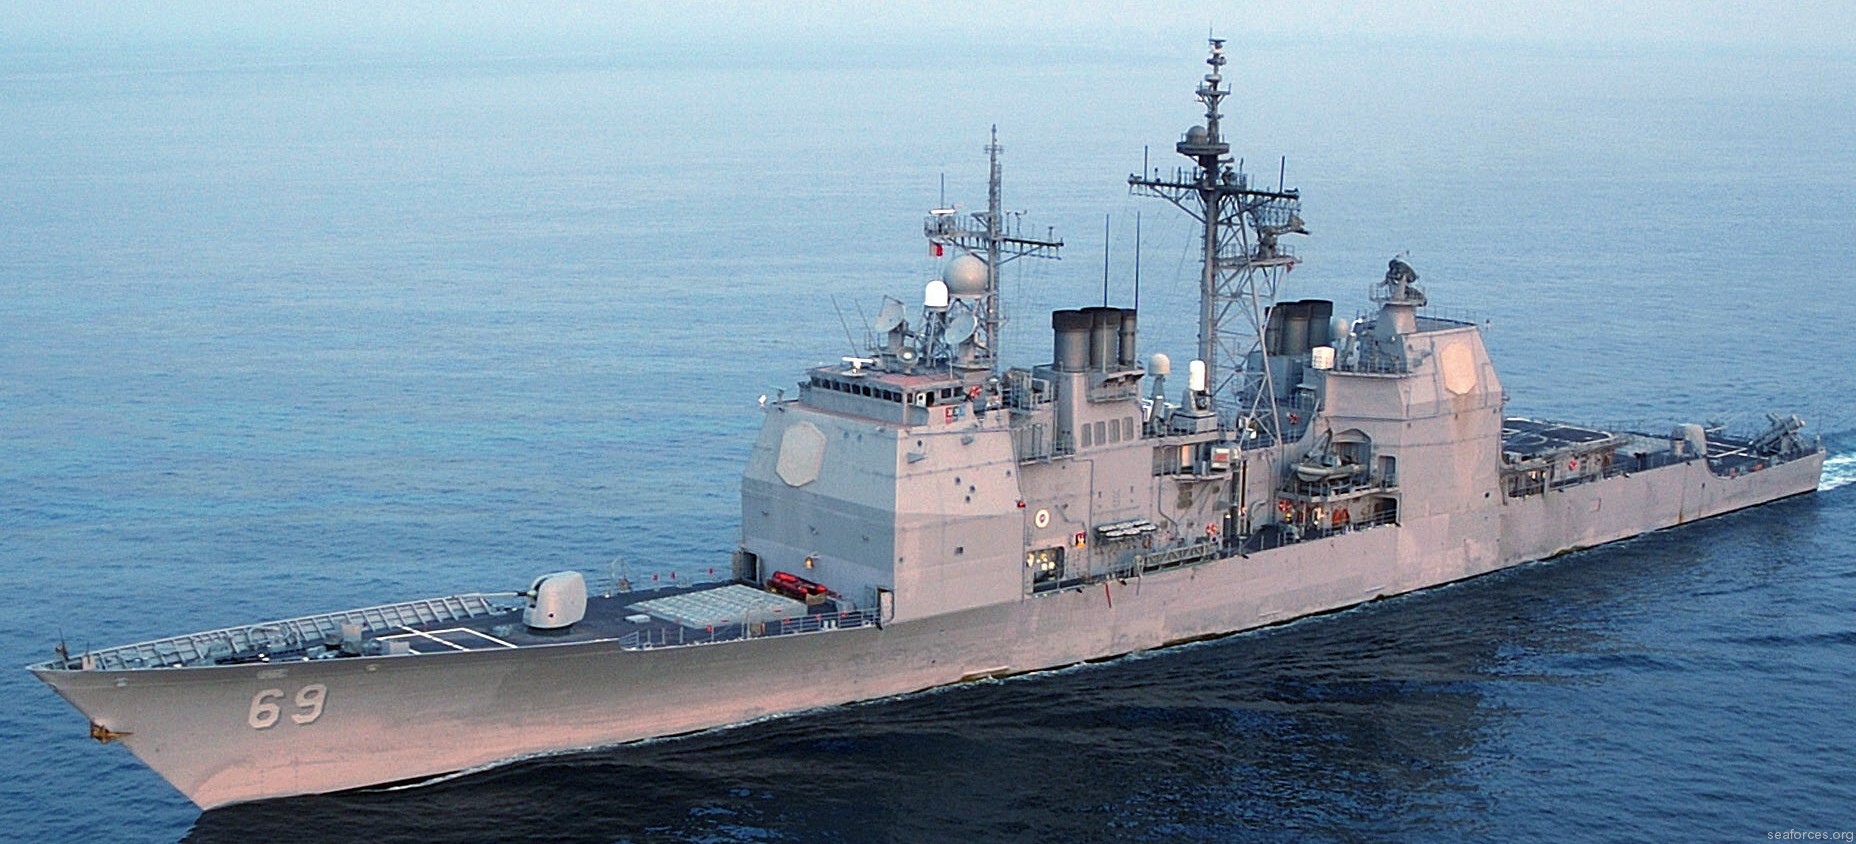 cg-69 uss vicksburg ticonderoga class guided missile cruiser us navy 59